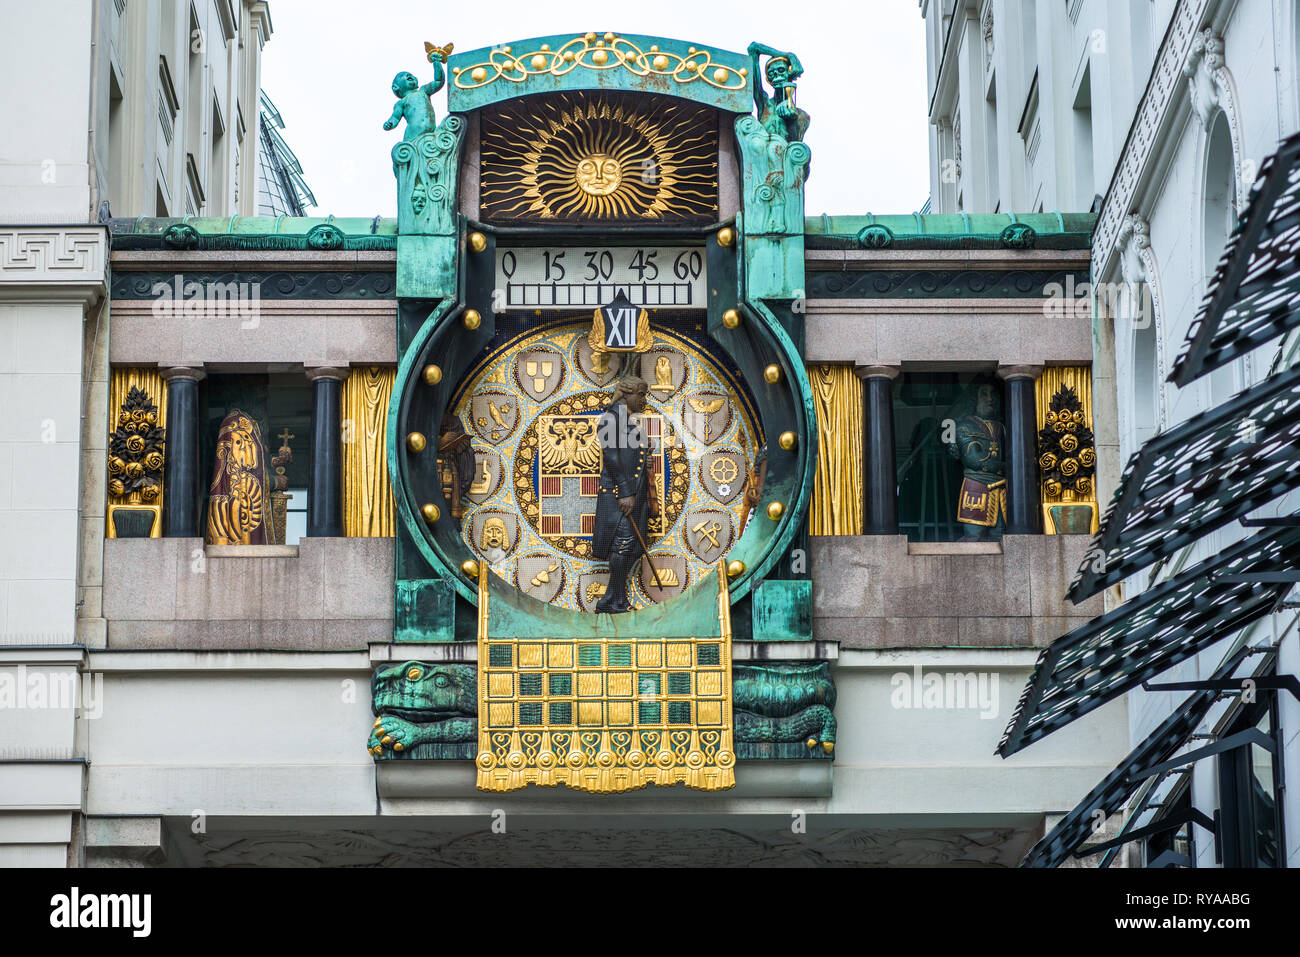 Ankeruhr (Anker clock) at Hohen Markt square, famous astronomical clock in Vienna, Austria built by Franz von Matsch. Stock Photo